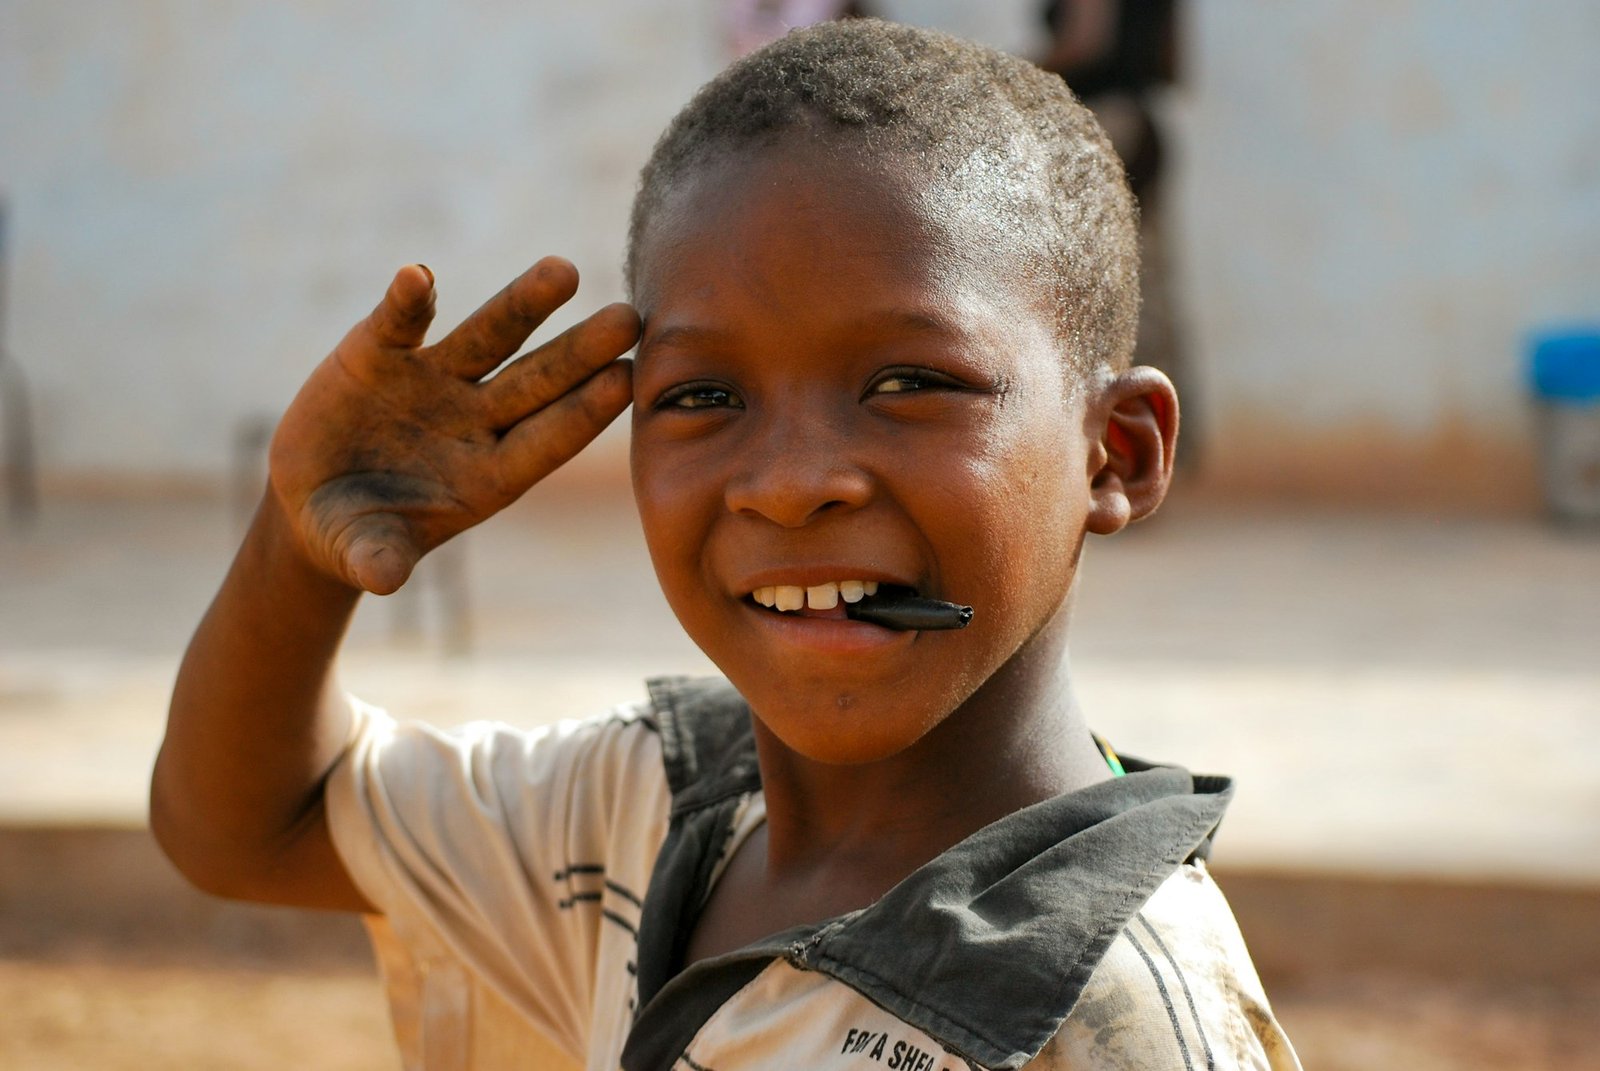 Little african boy (streetchild) greeting - africa travel portrait child